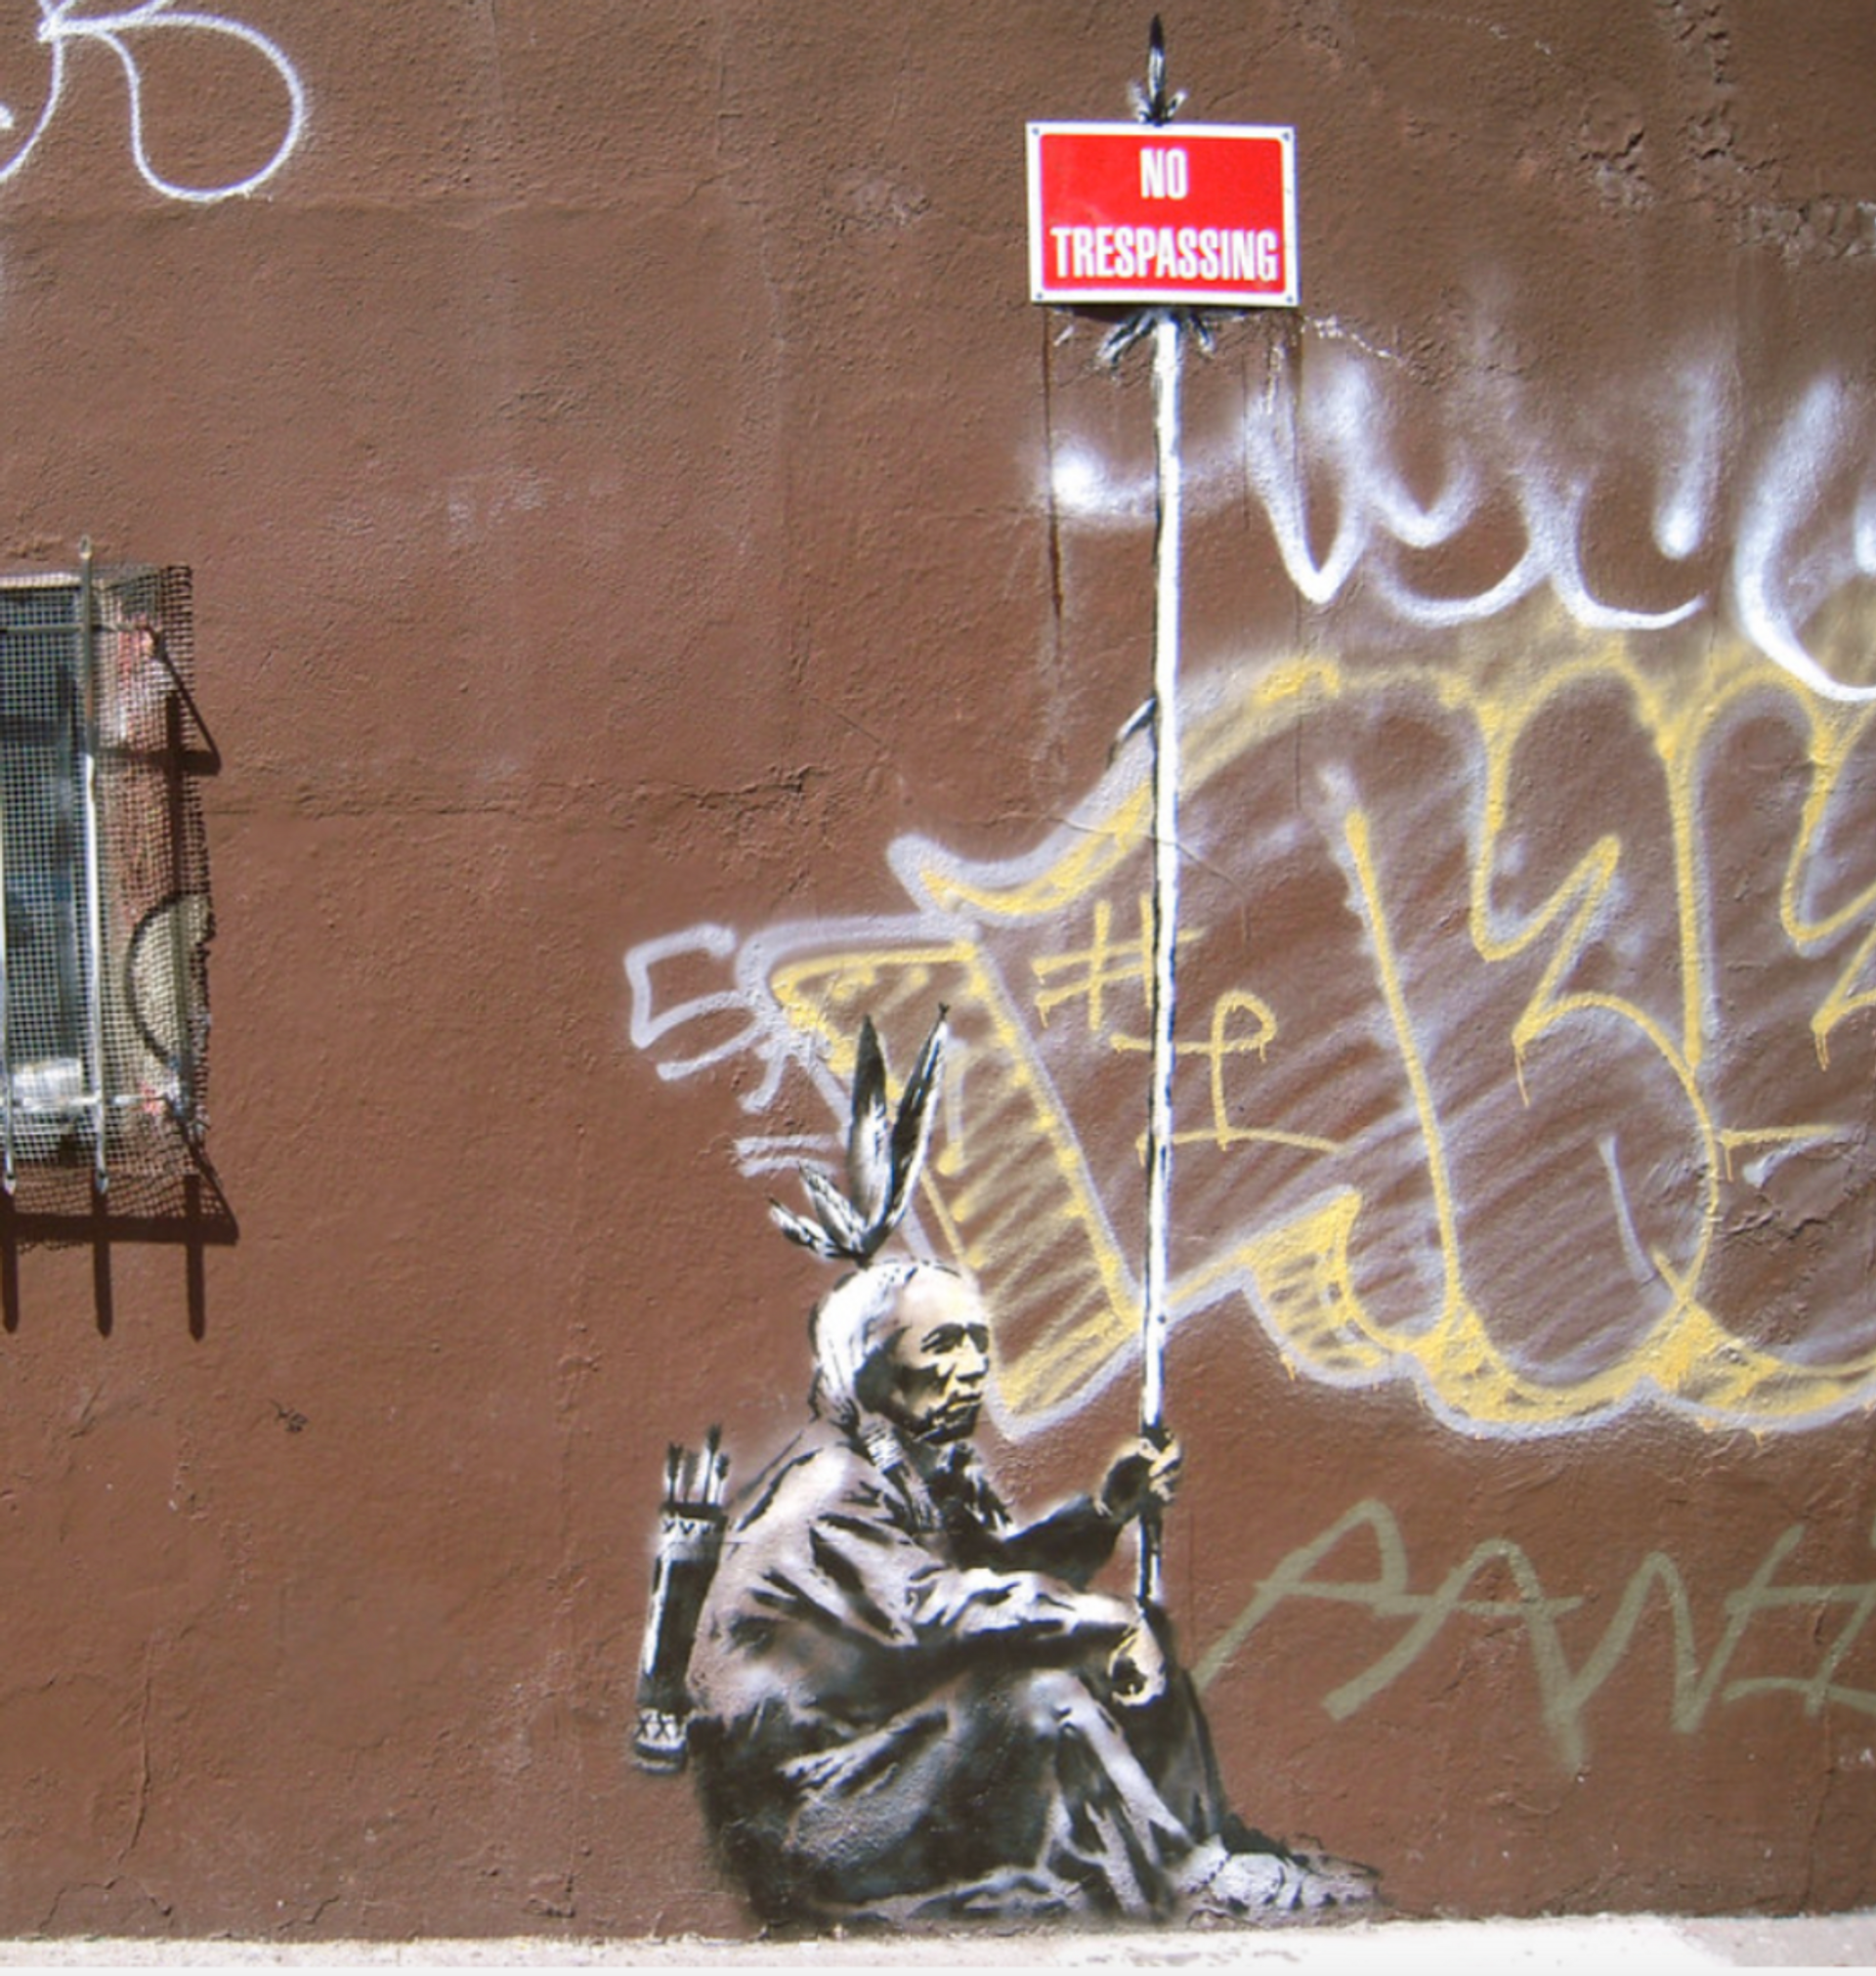 No Trespassing by Banksy